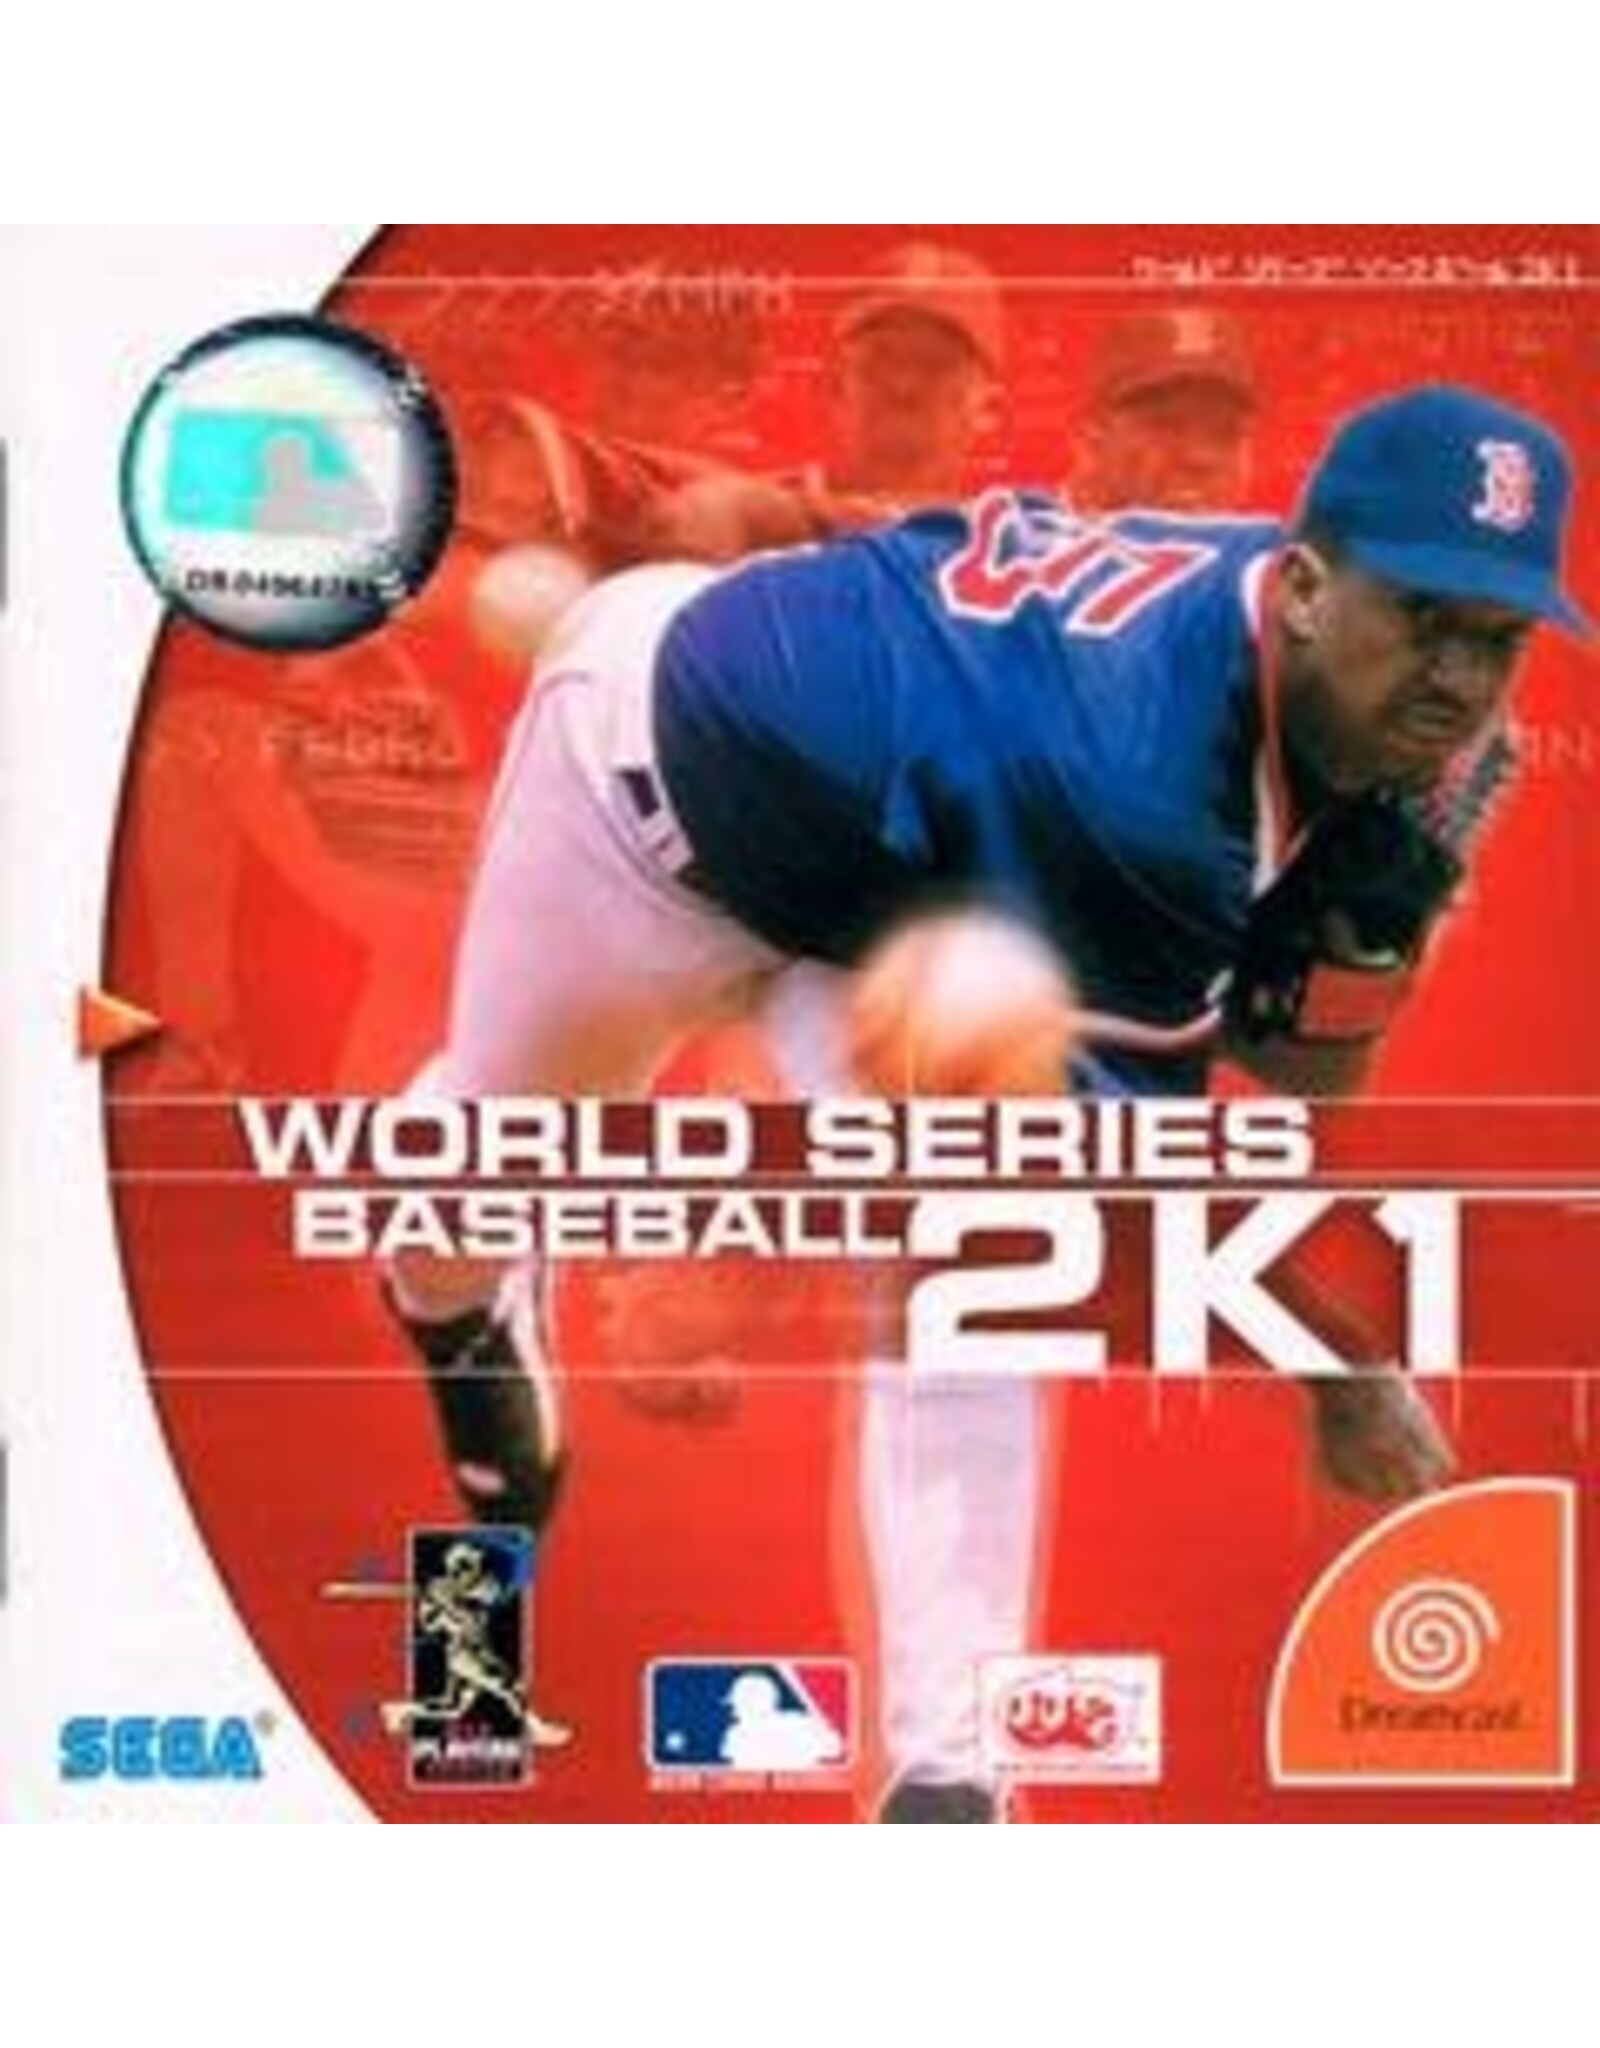 Sega Dreamcast World Series Baseball 2K1 (CiB, Missing Obi Strip, JP Import)